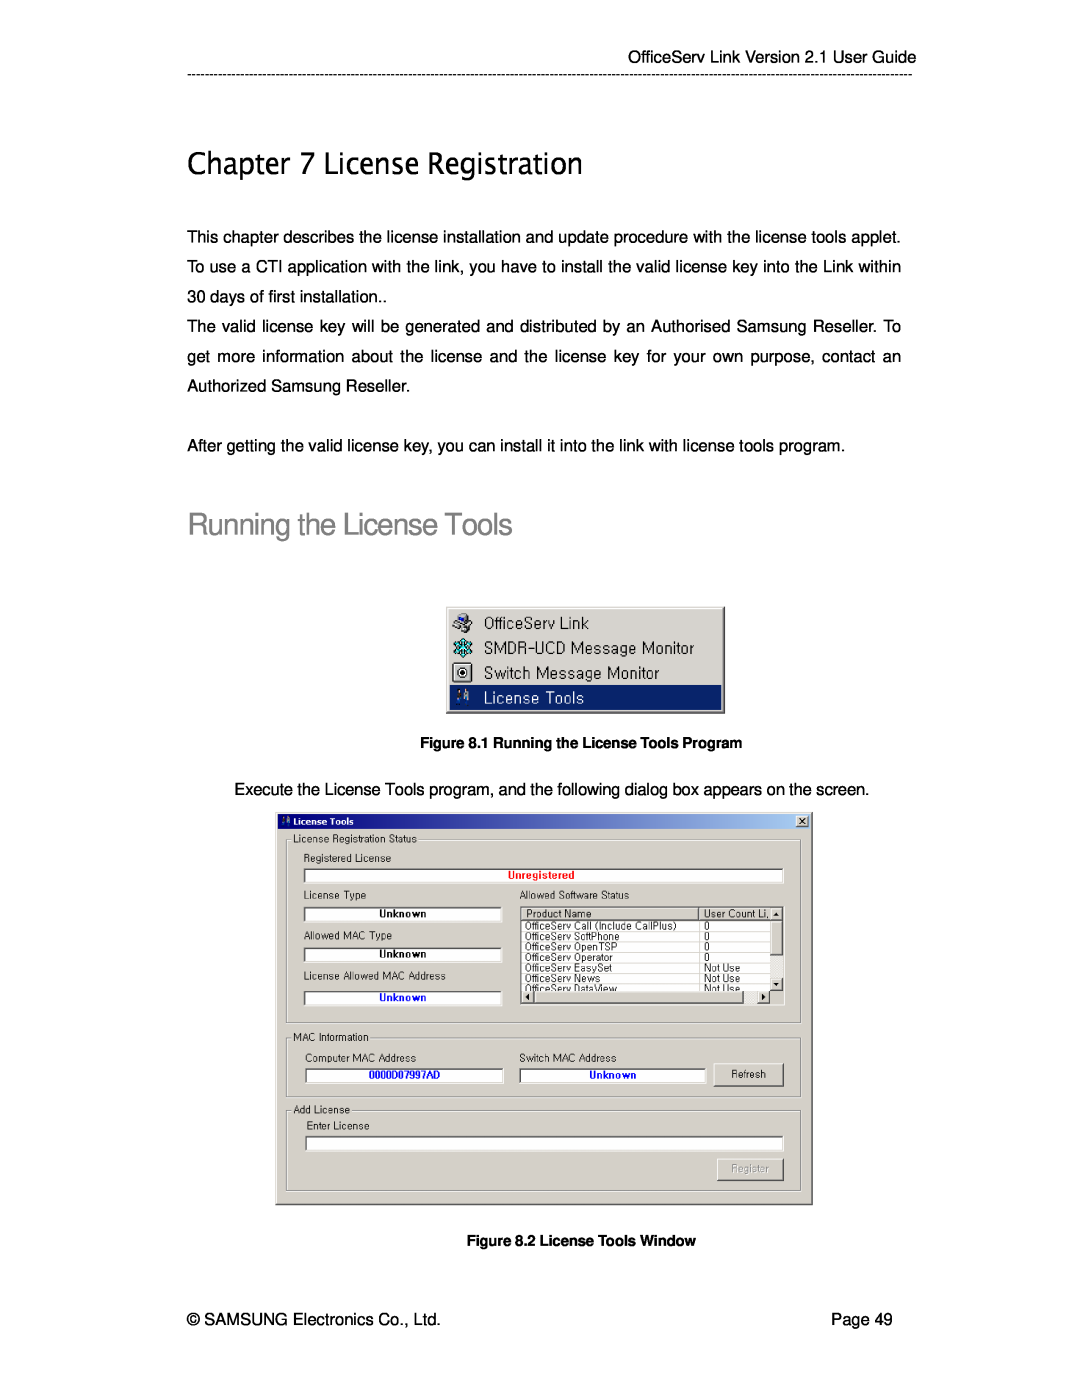 Samsung Version 2.1 manual License Registration, Running the License Tools 